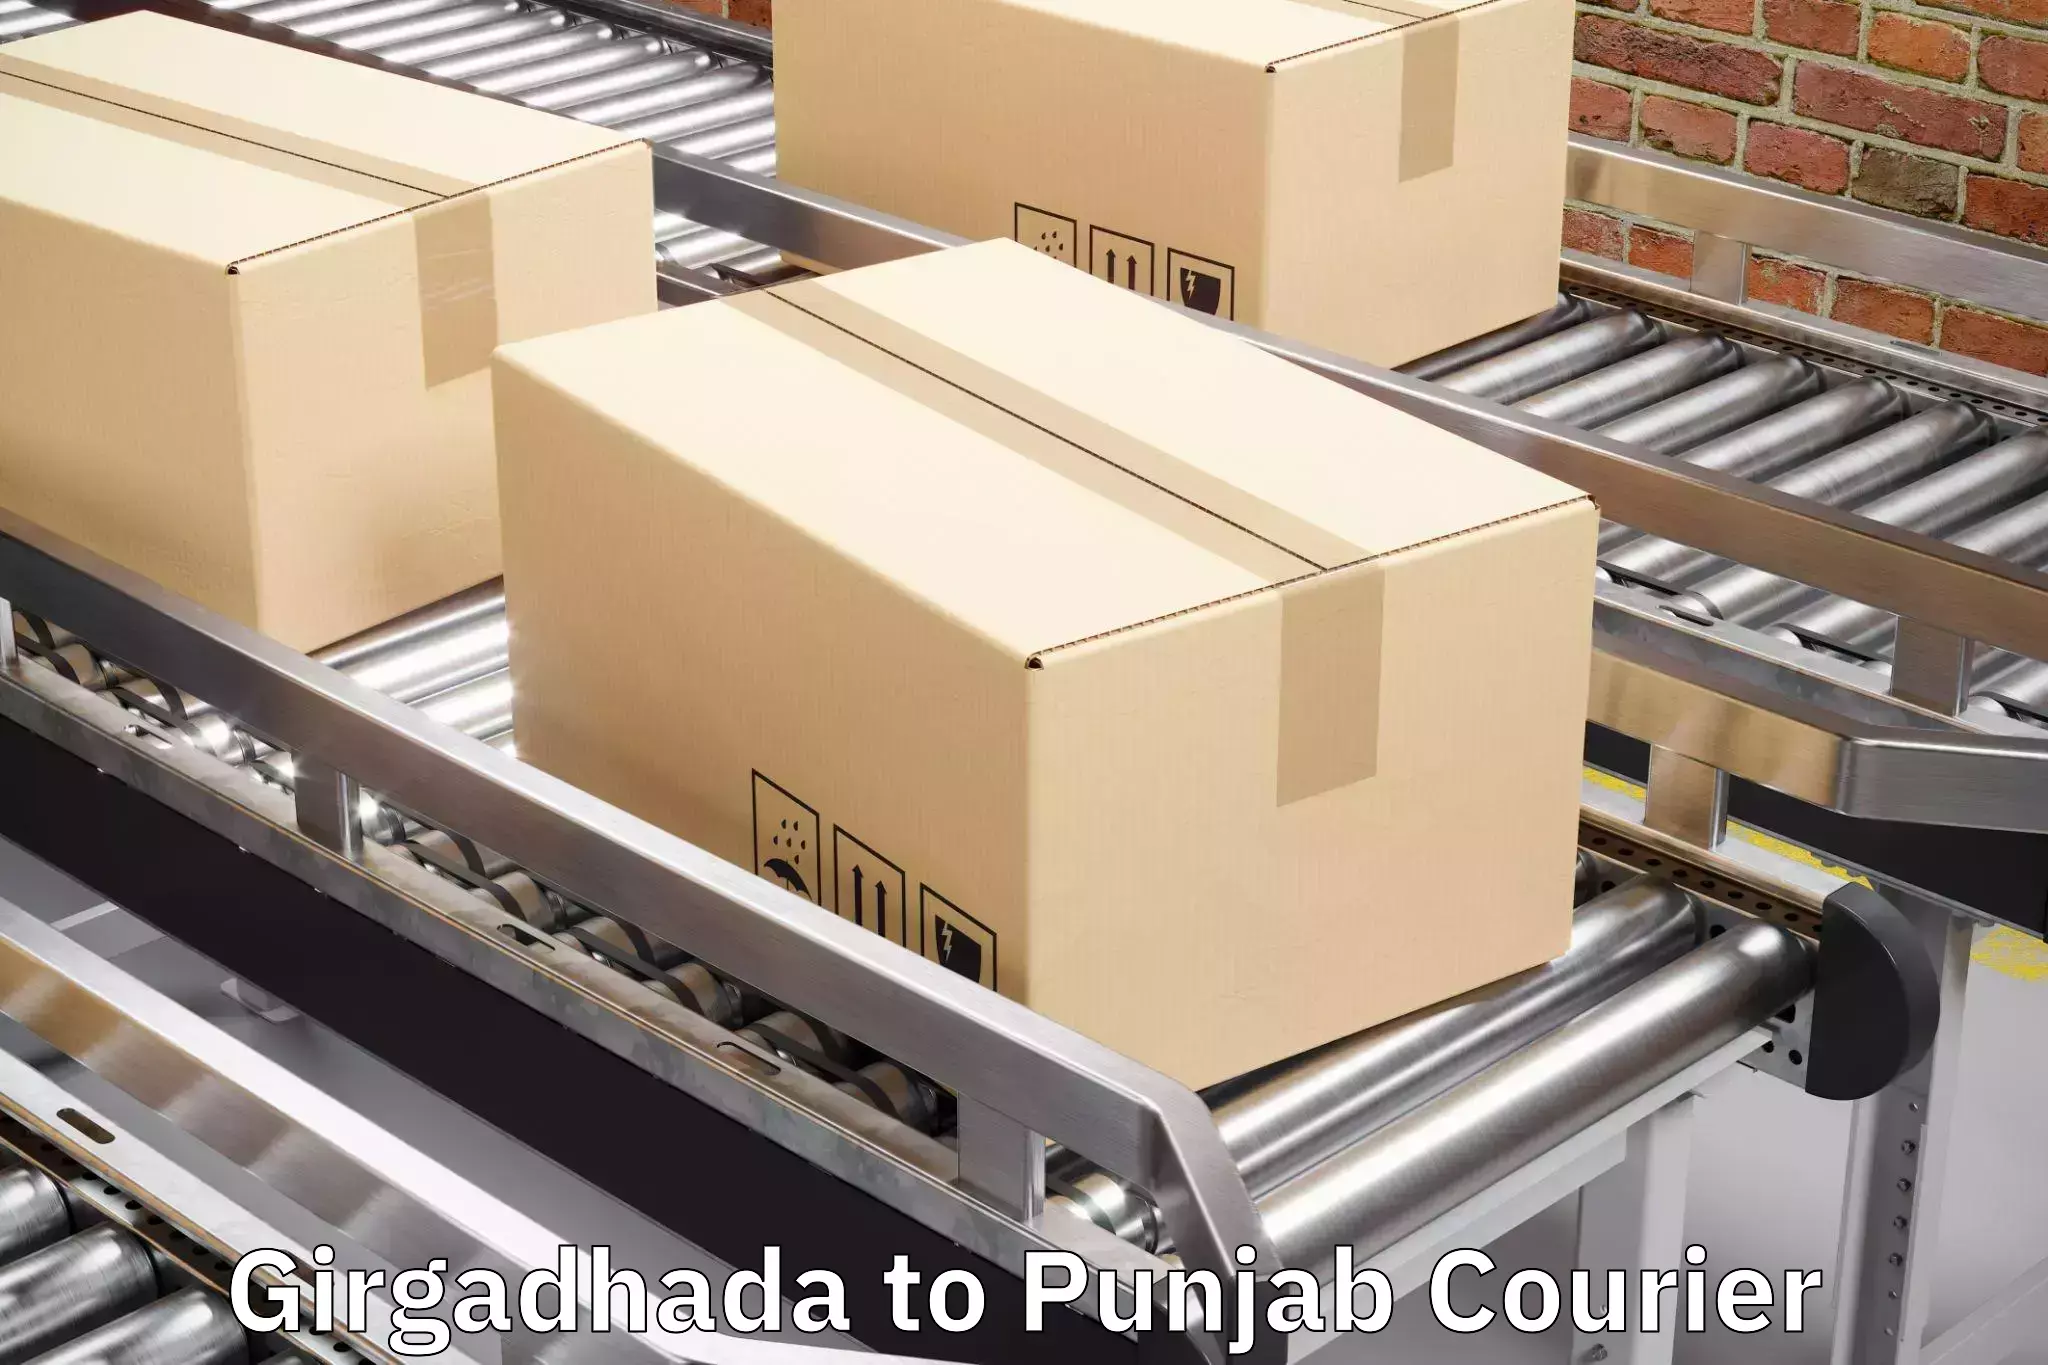 Urgent luggage shipment in Girgadhada to Punjab